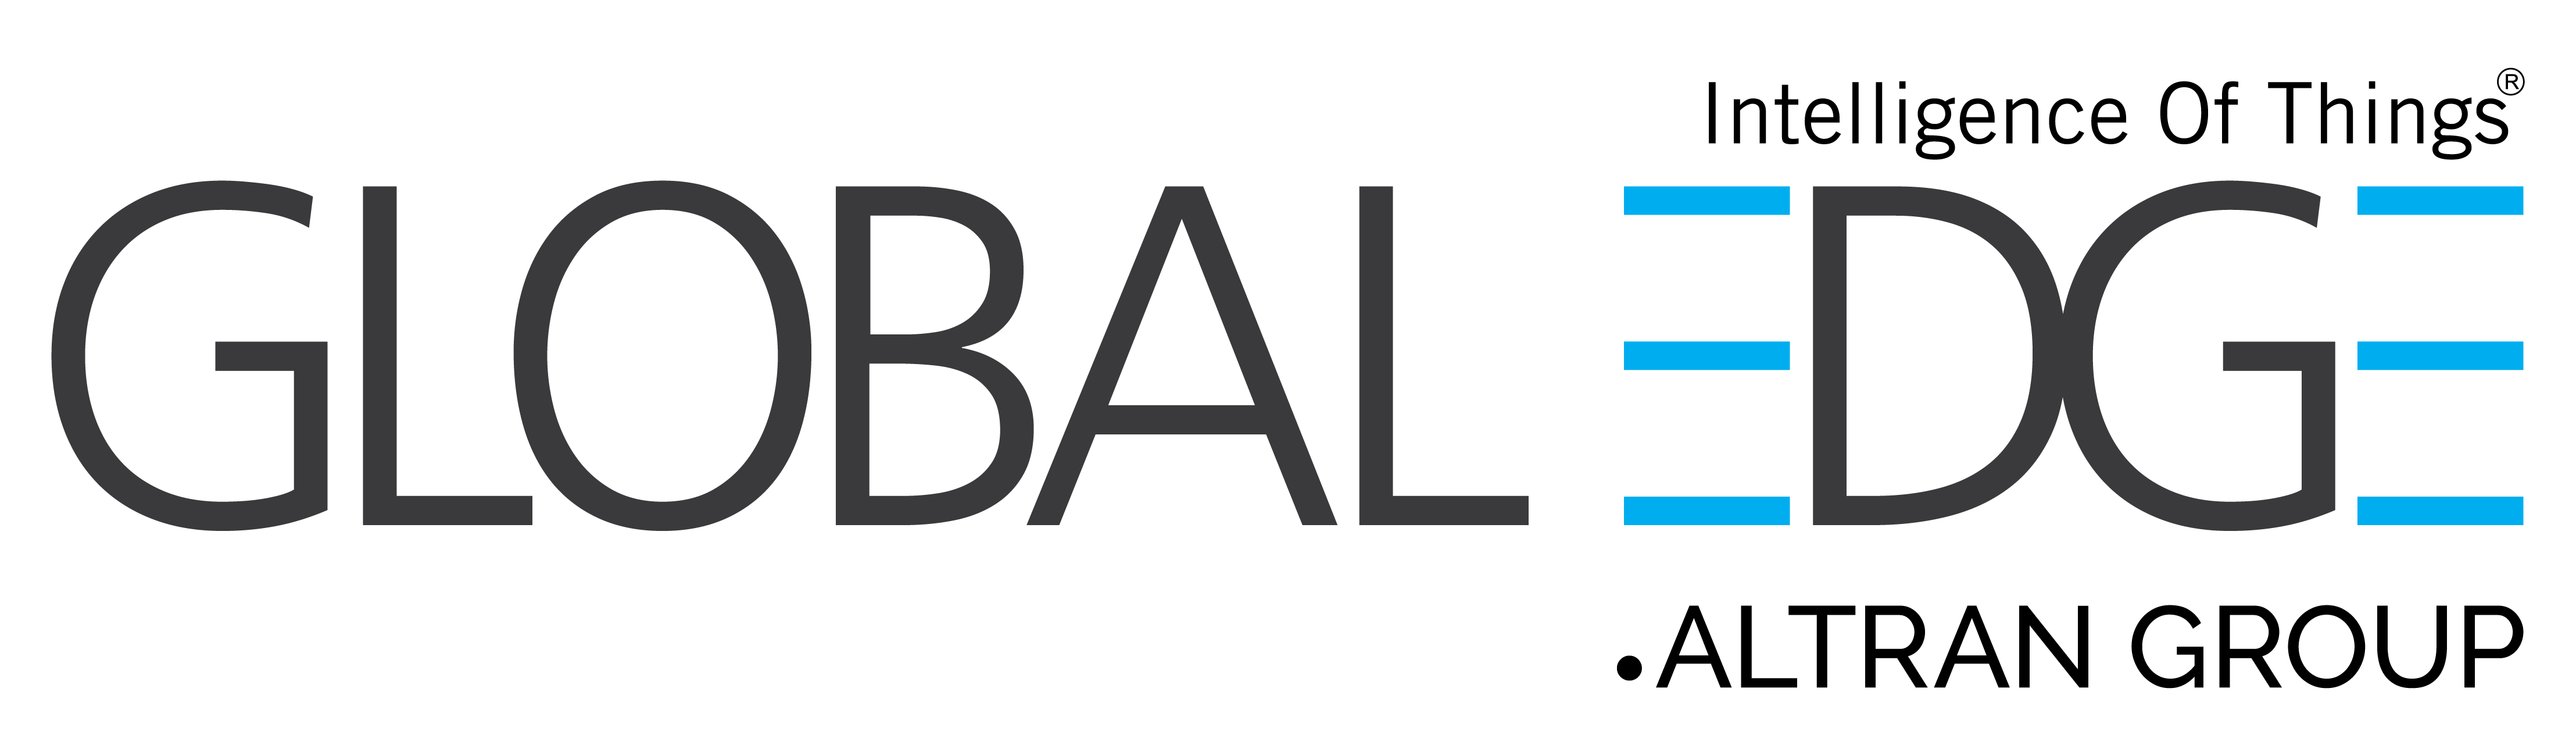 GlobalEdge_Logo.png 